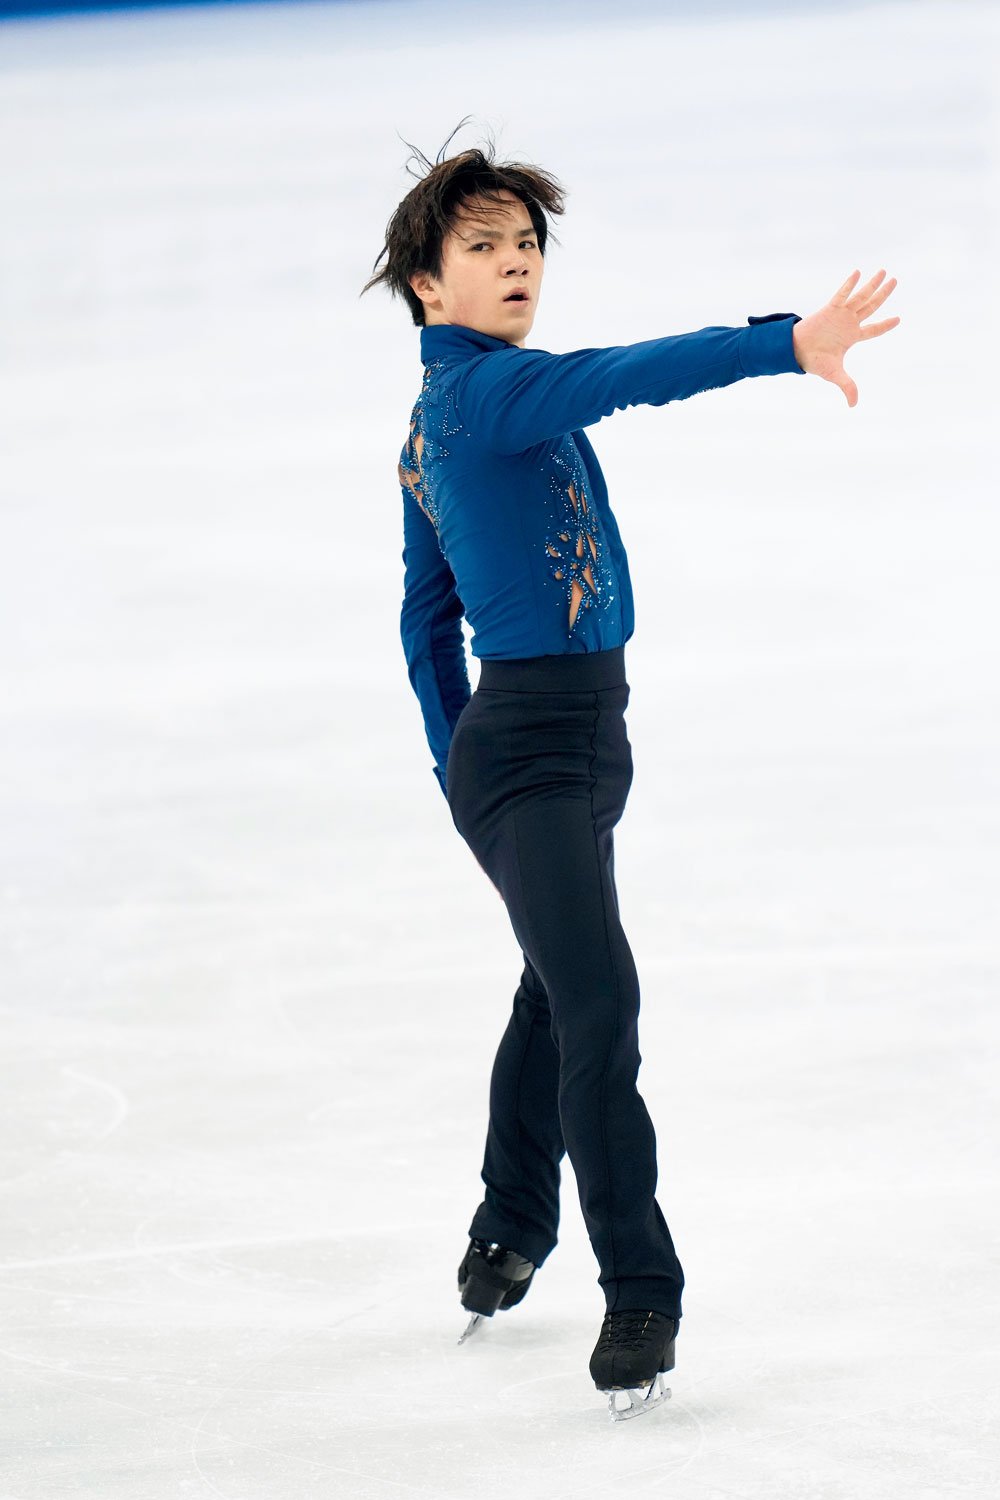 2021.3.27 World Championships　photo: Yukihito Taguchi